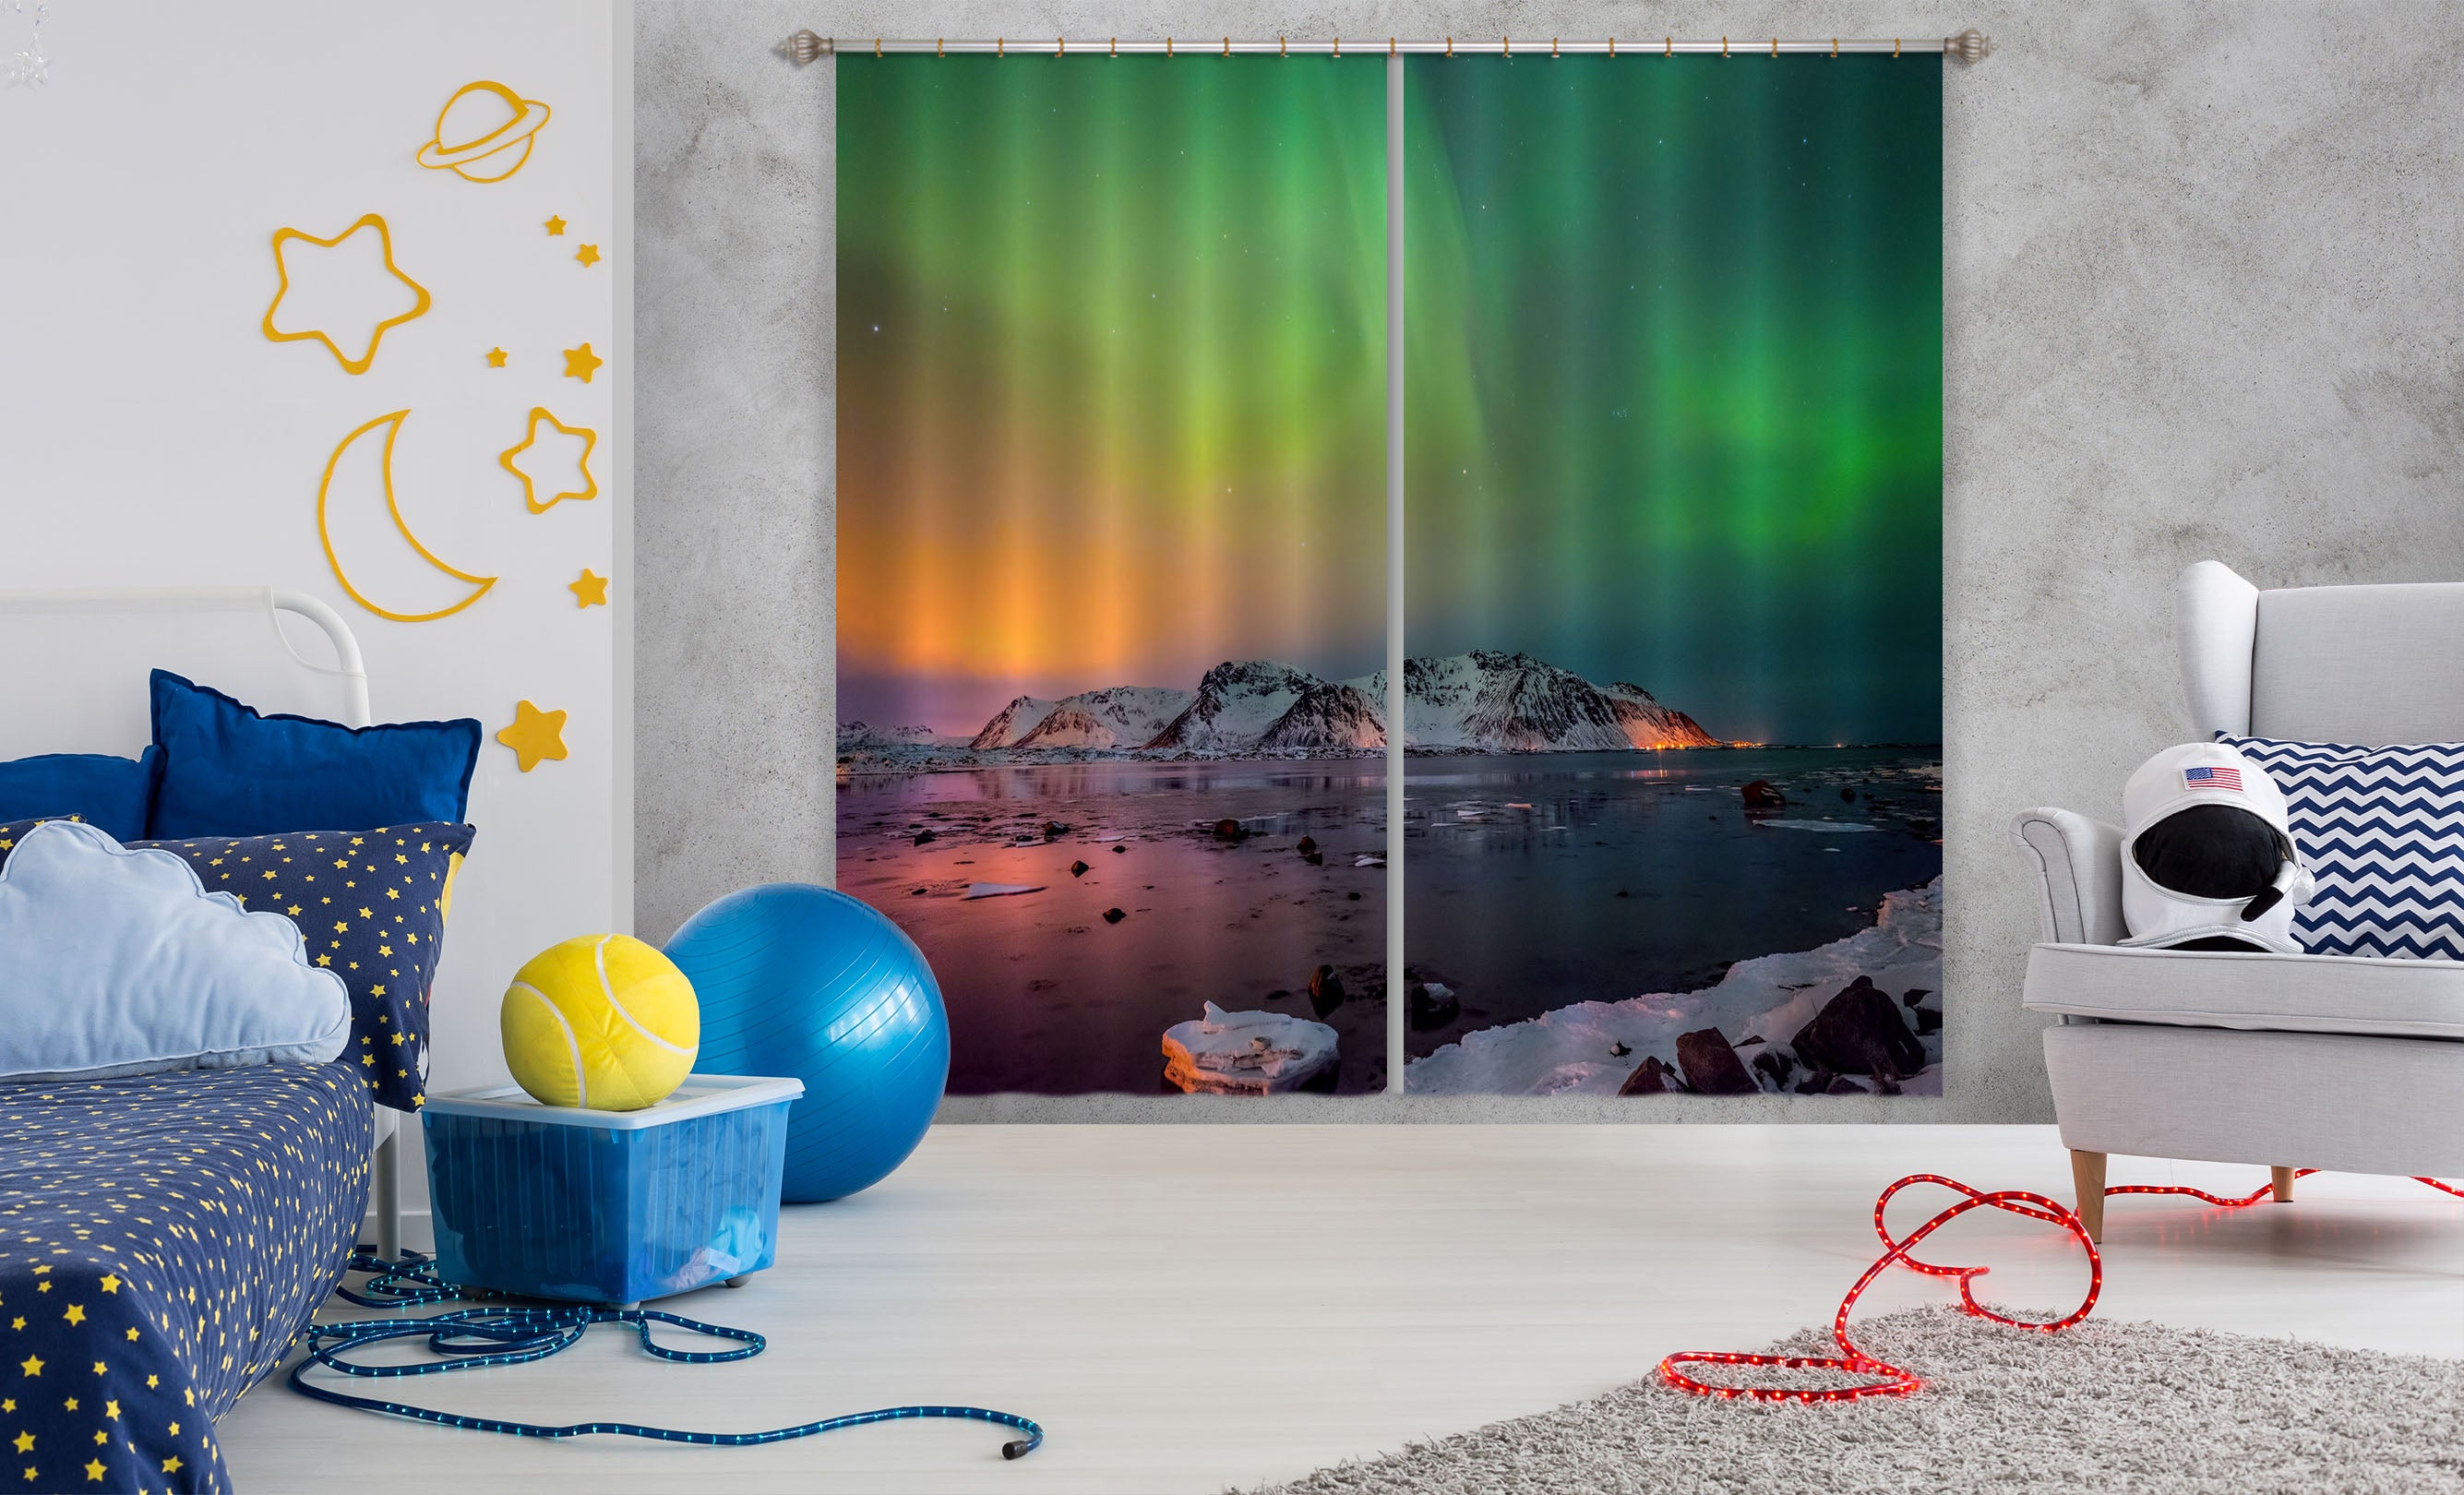 3D Green Sky 150 Marco Carmassi Curtain Curtains Drapes